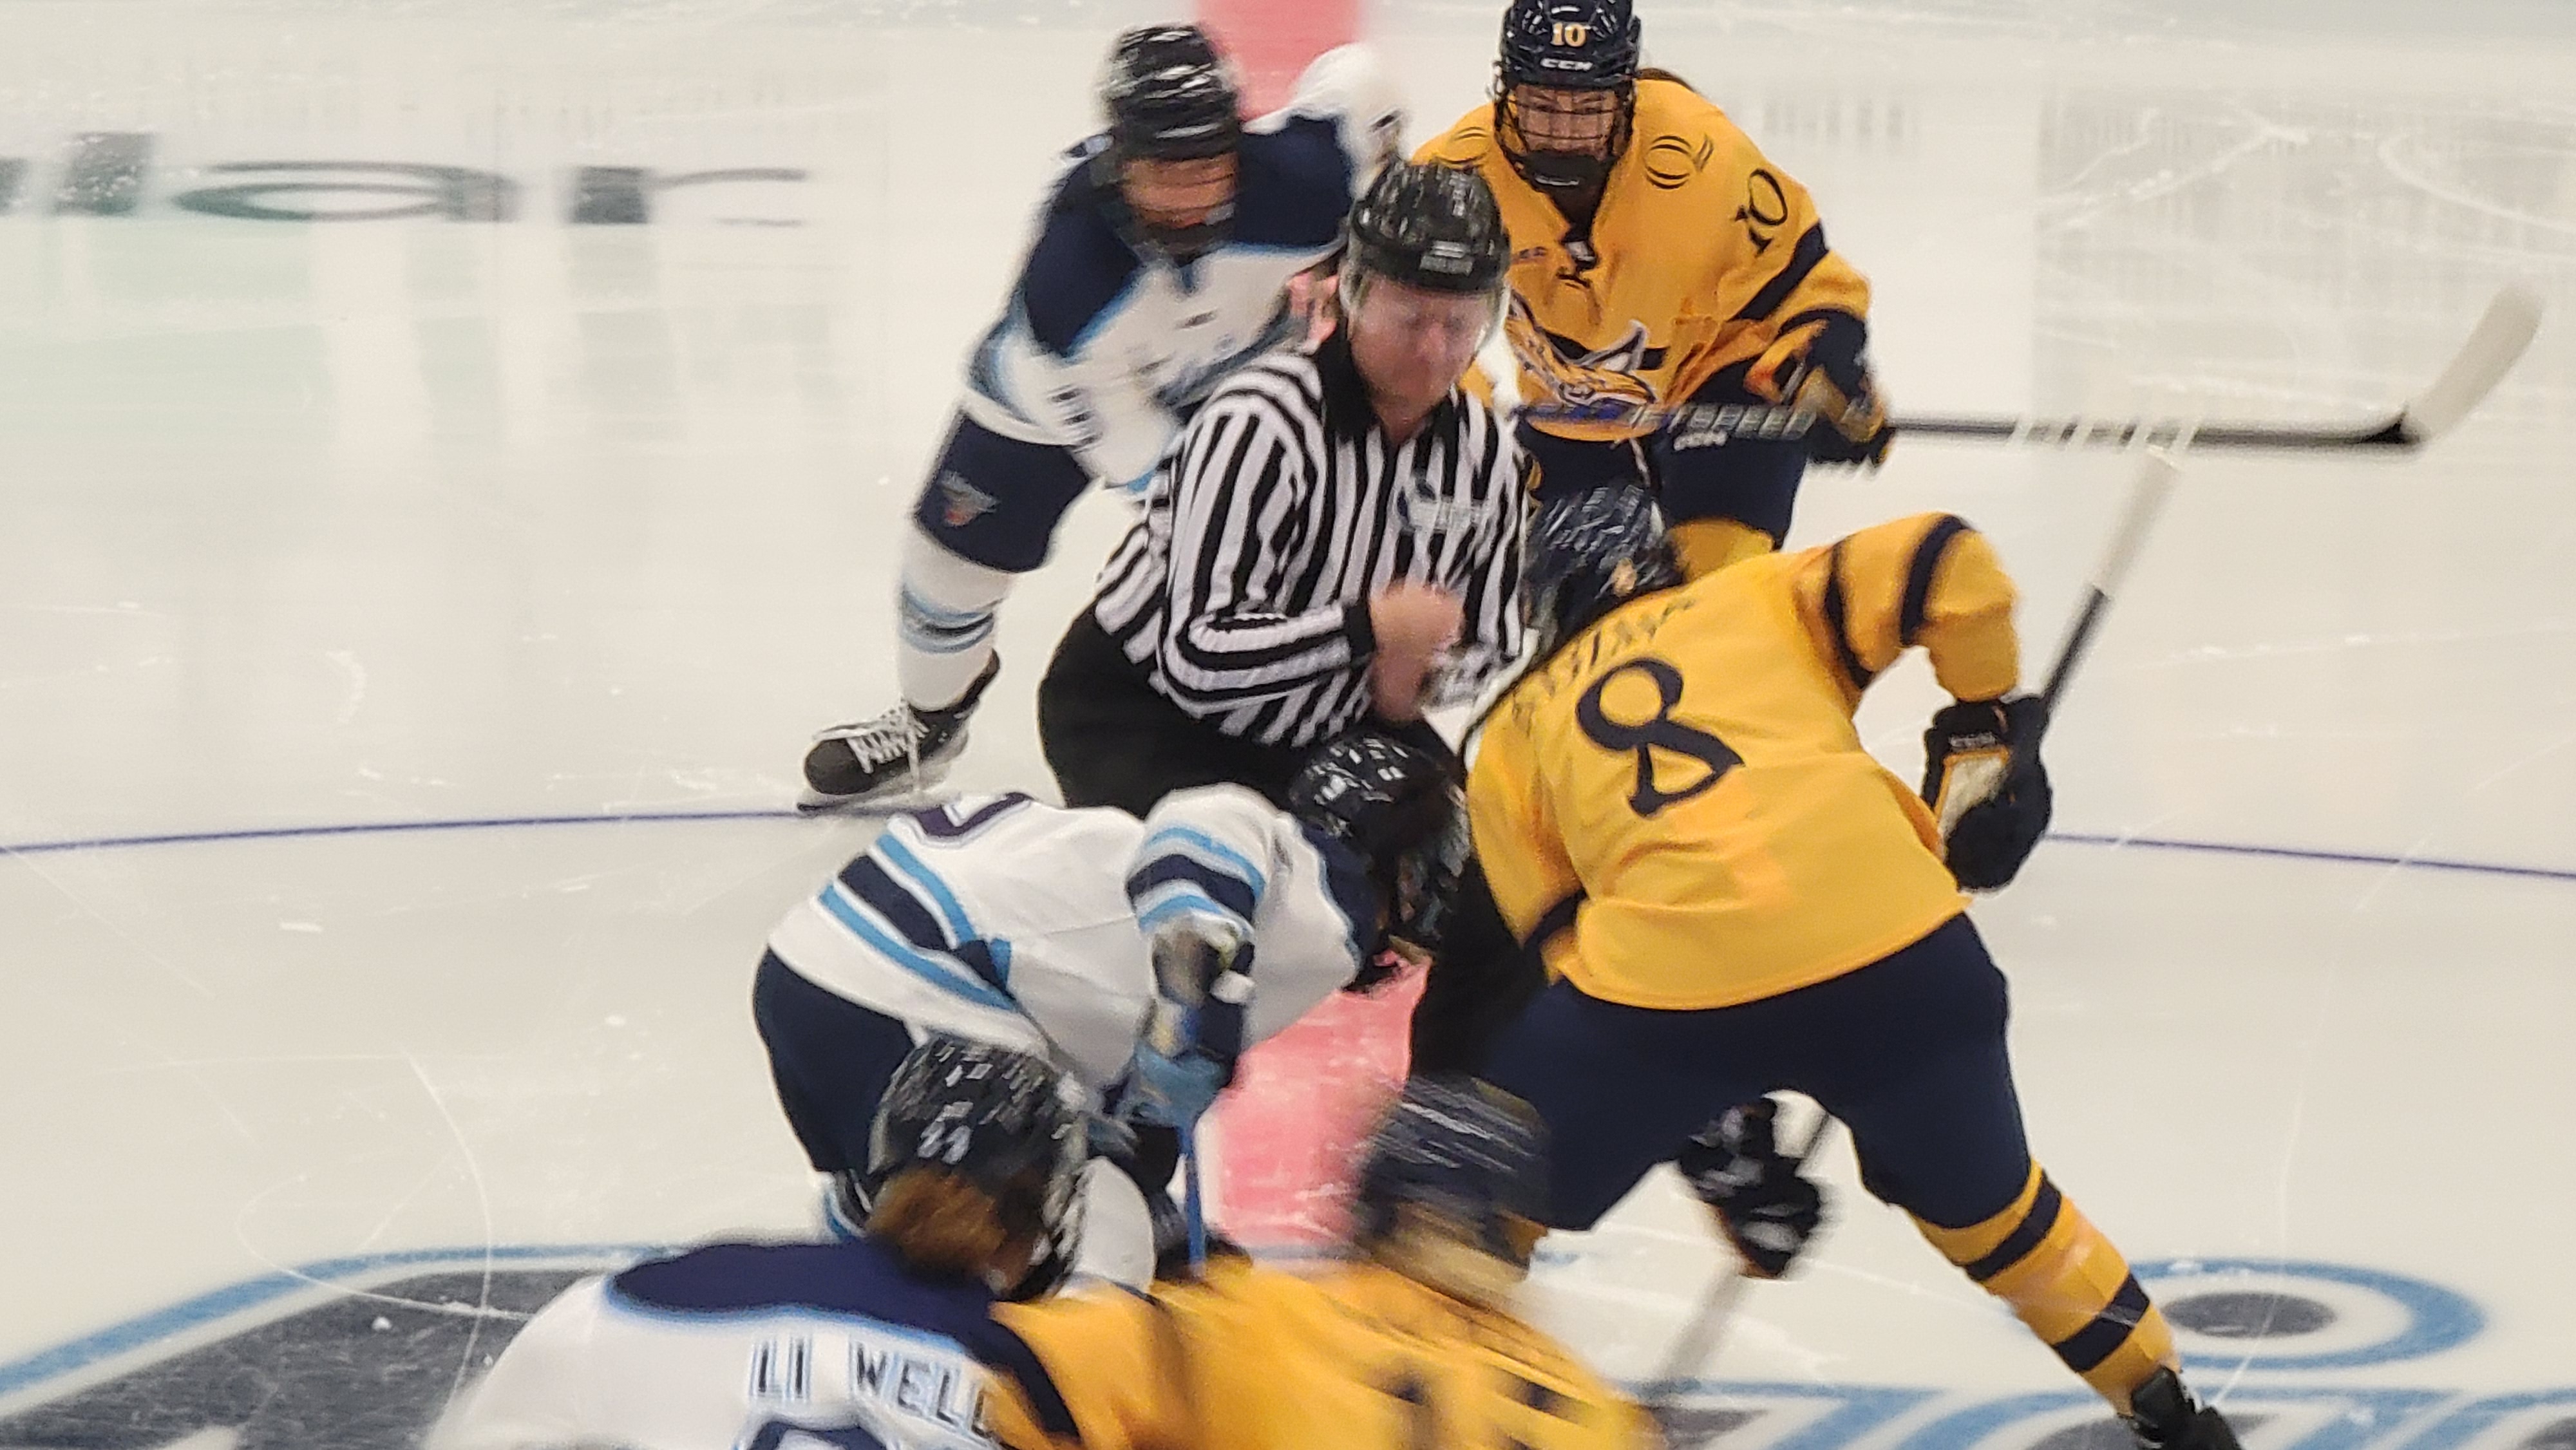 Maine Women's Ice Hockey (@mainewih) • Instagram photos and videos